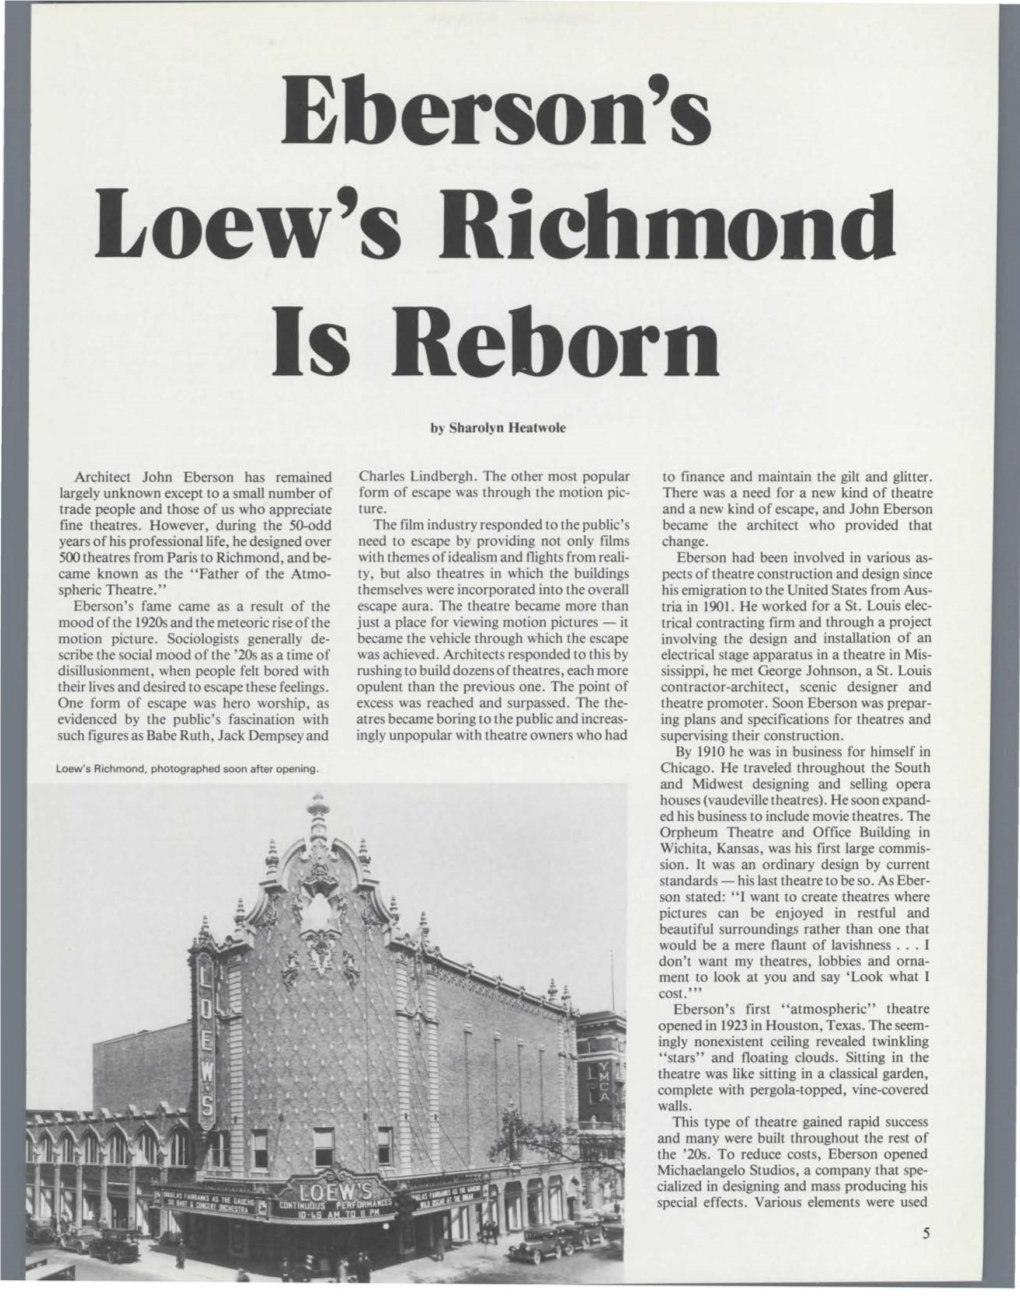 Eberson's Loew's Richmond Is Reborn